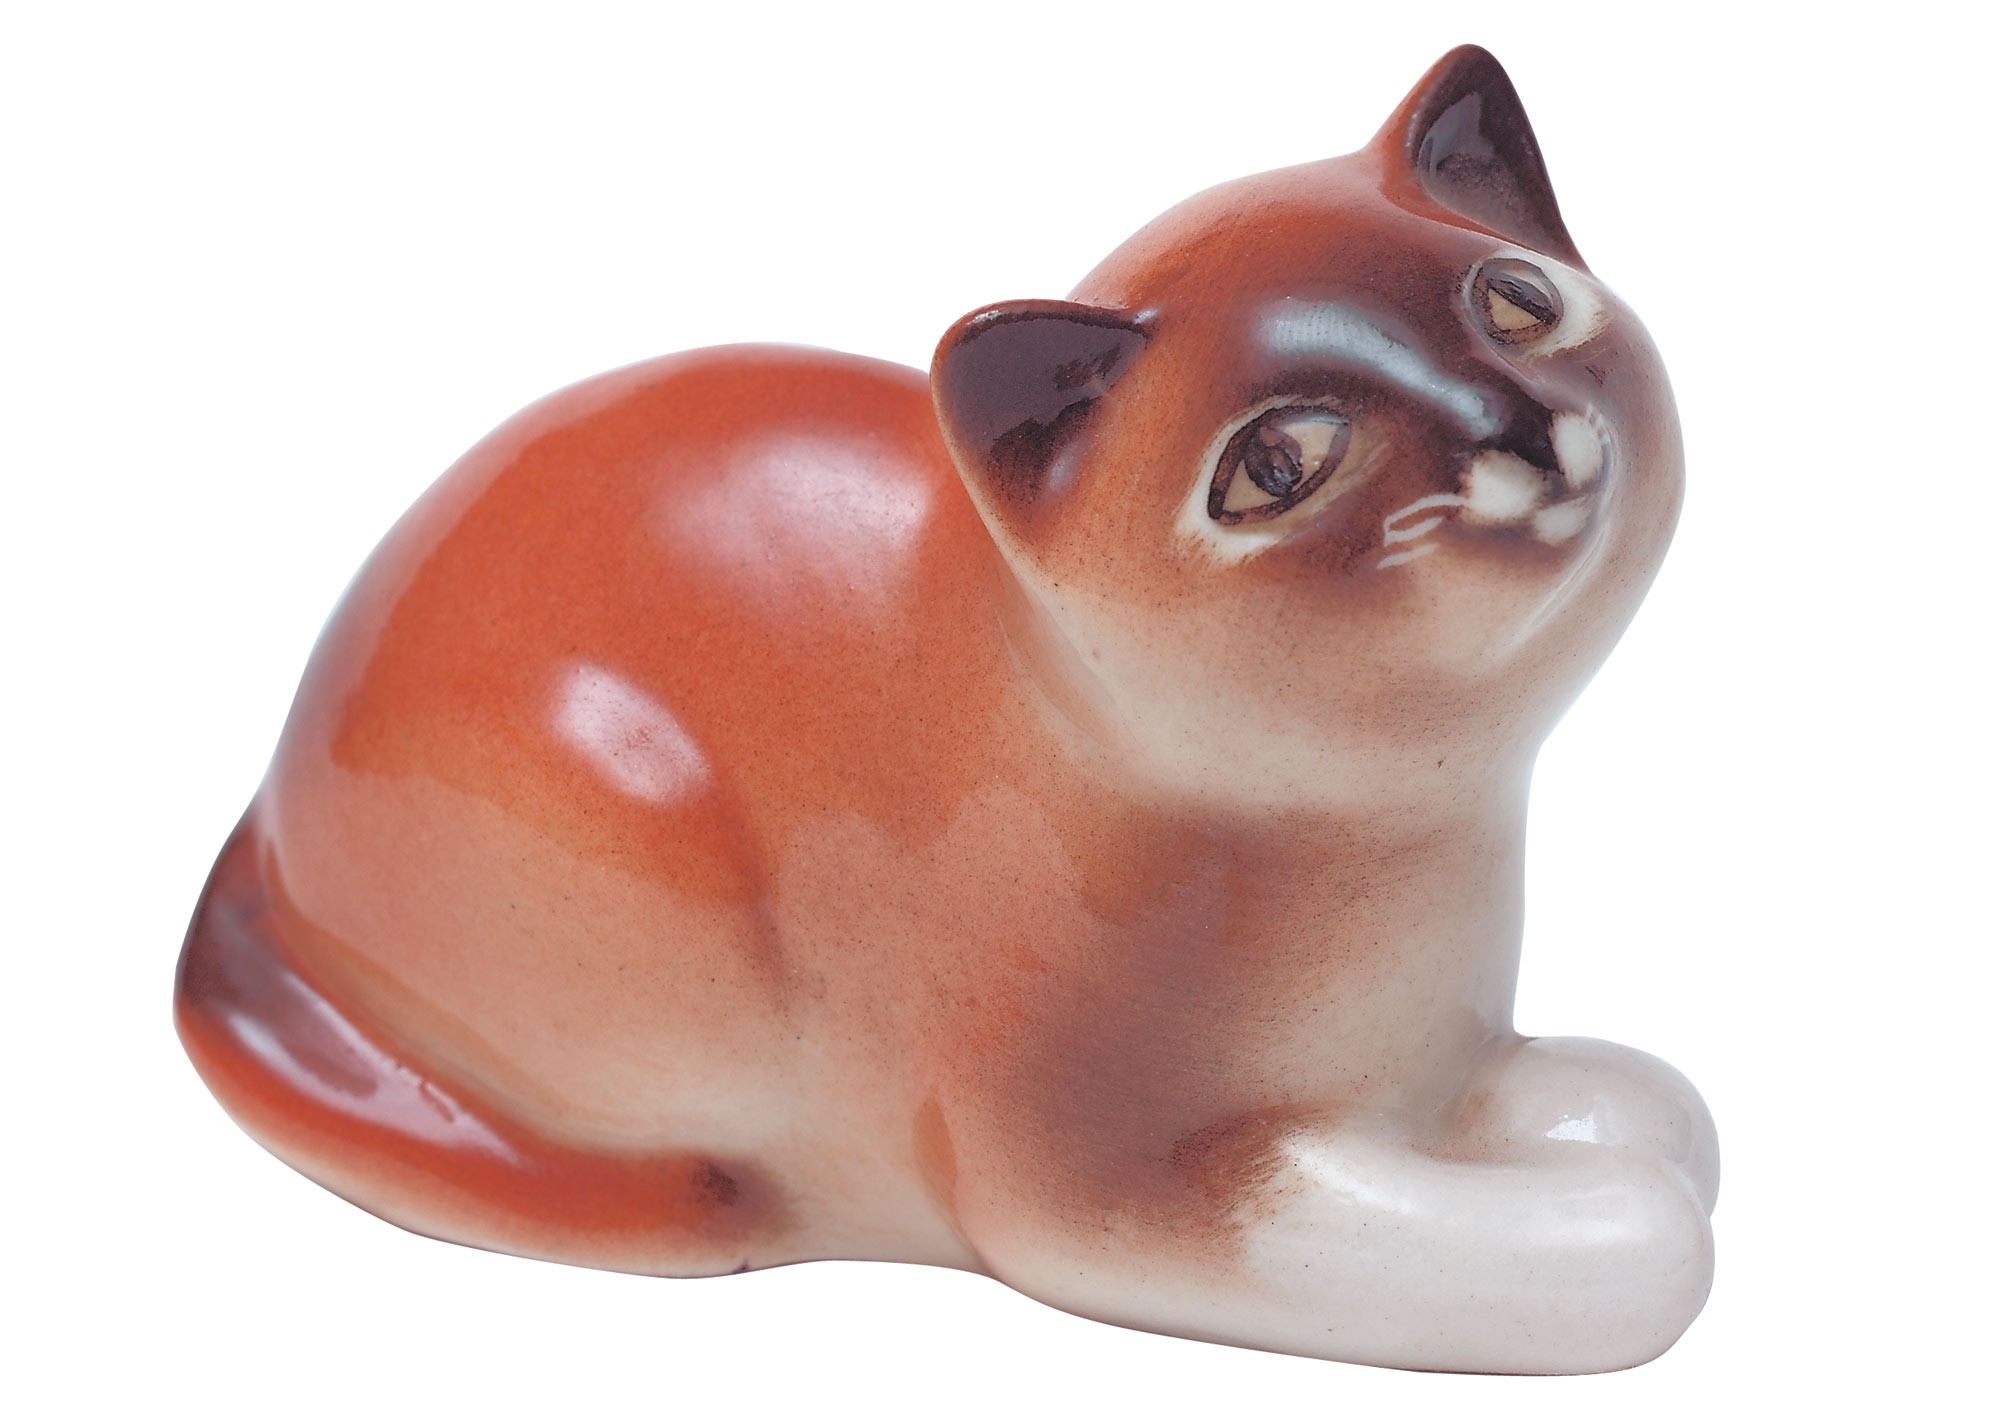 Buy Tan Kitten with a Ball Figurine at GoldenCockerel.com